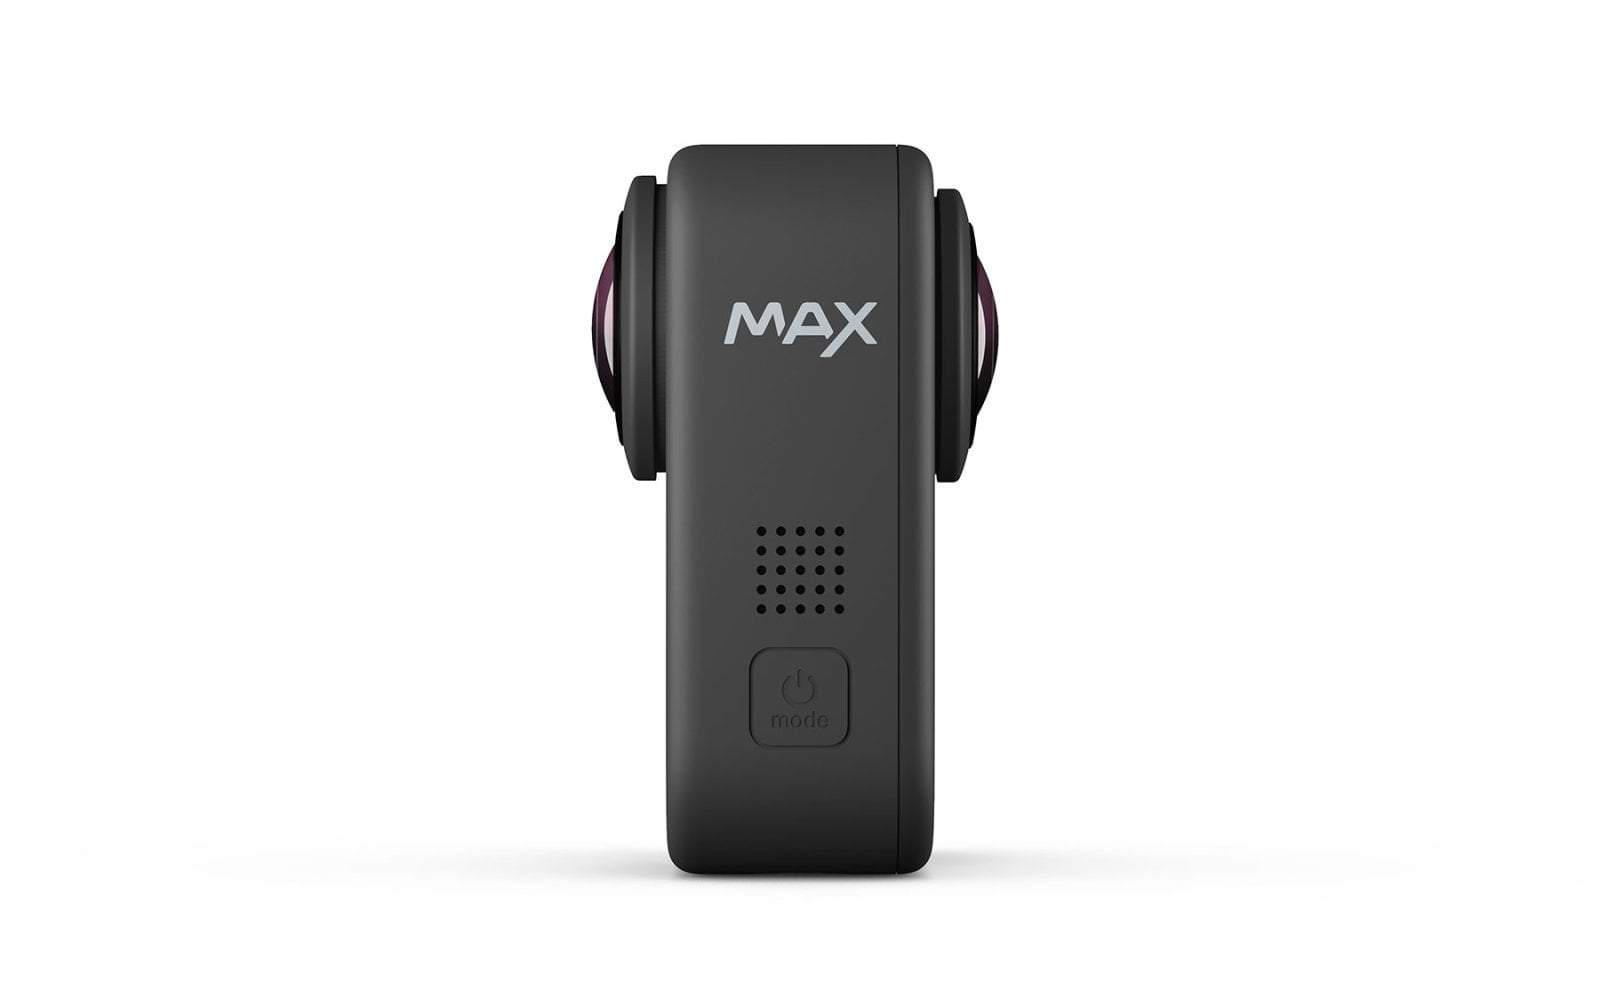 GoPro Max 360 Action Camera